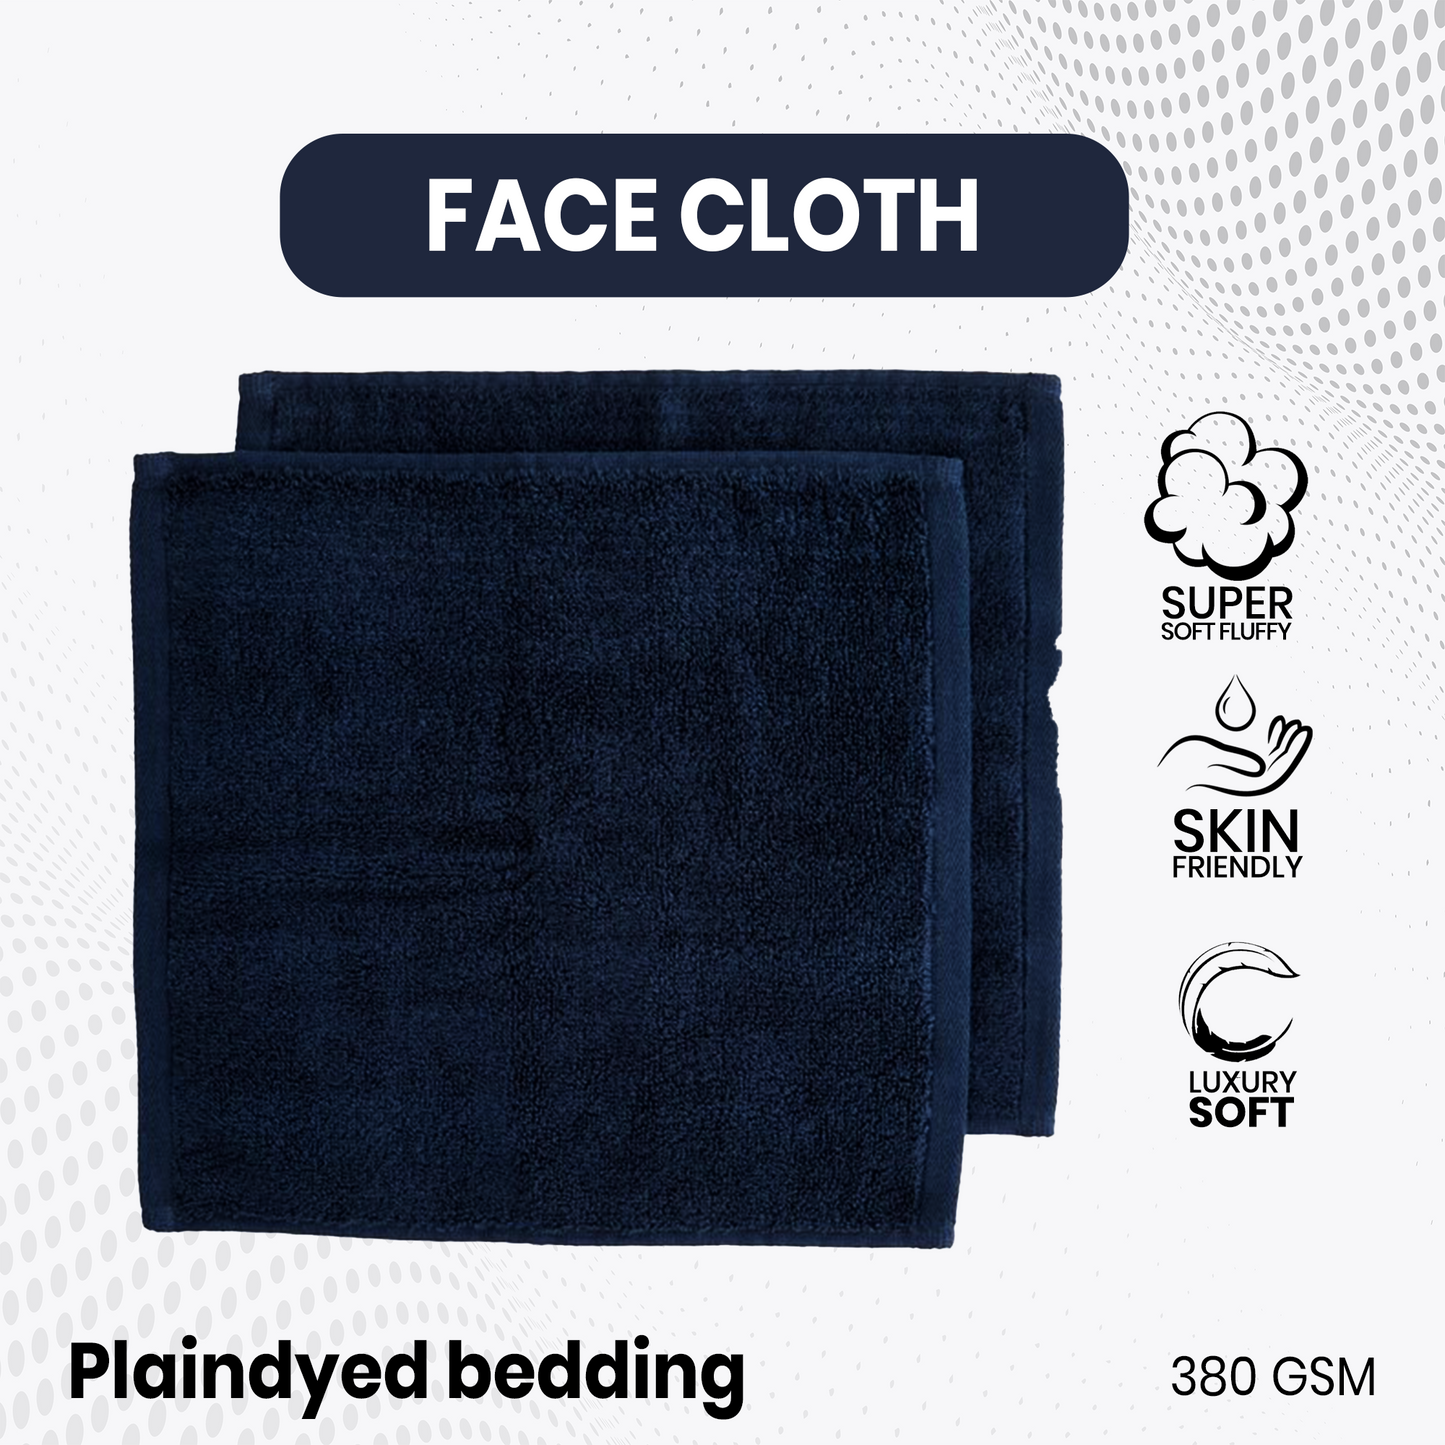 Clearance Sale Soft Egyptian Cotton Bath Towels Sheet Set Face Towels pack Wash Cloths ⭐⭐⭐⭐⭐